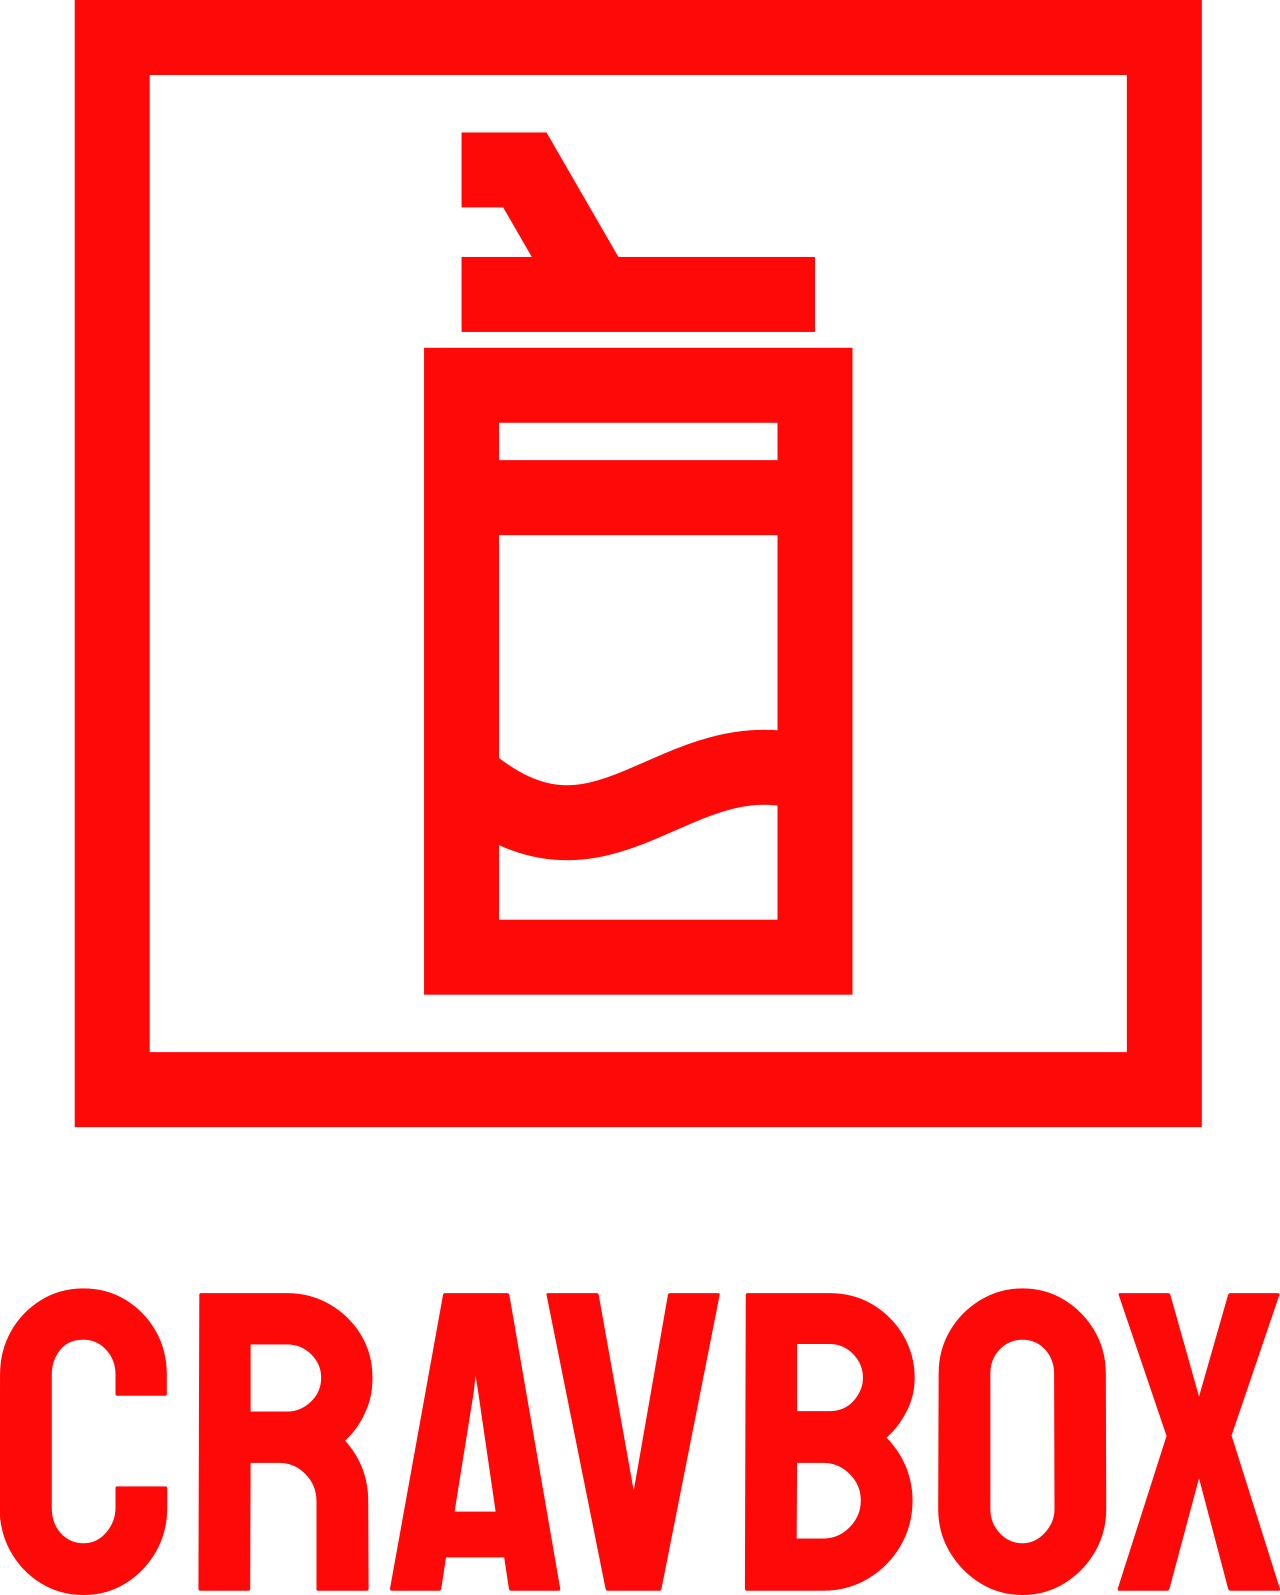 CravBox's web page